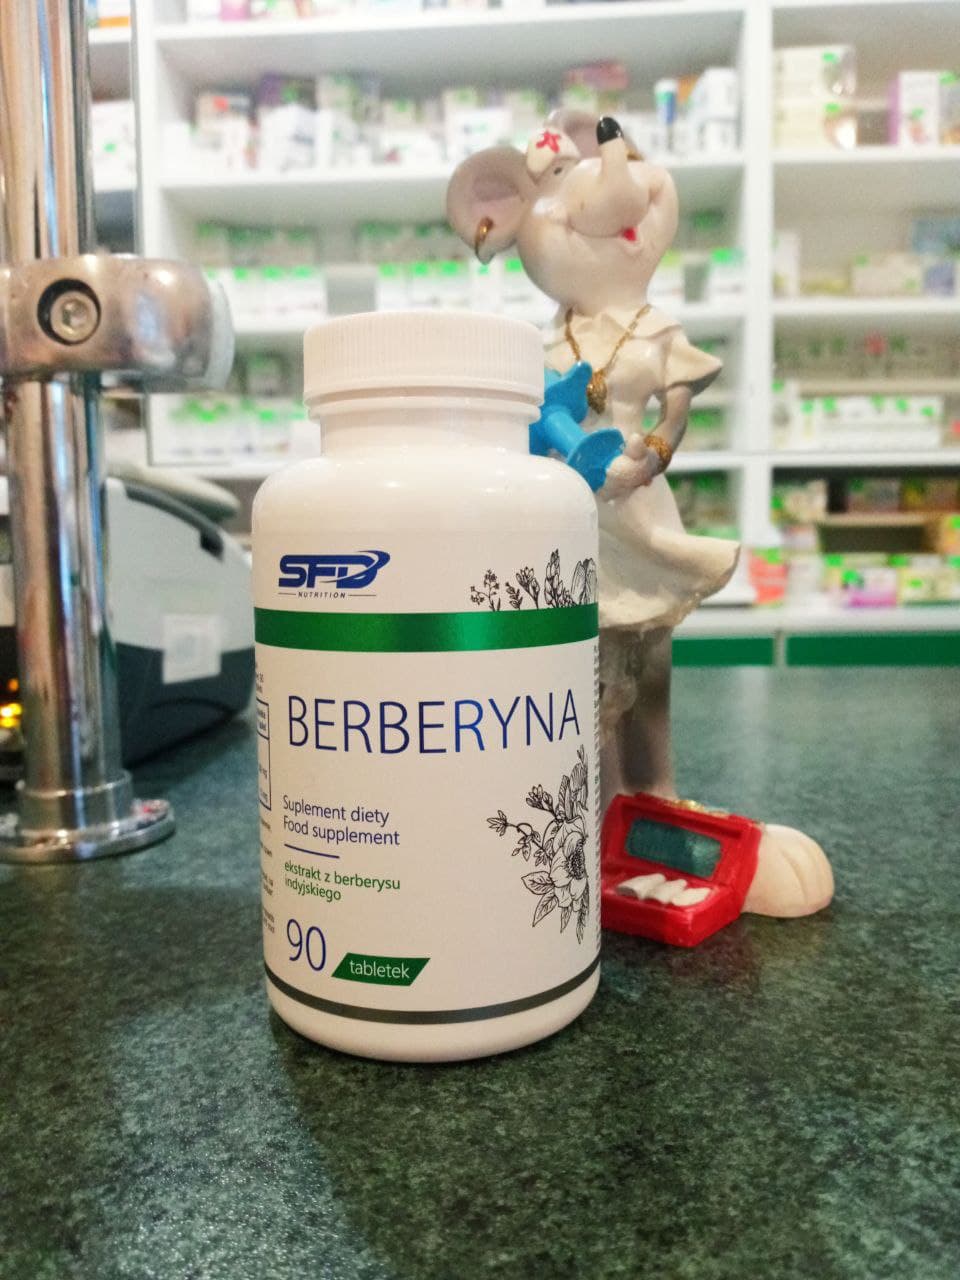 БАД Берберин - эффективное средство снижения сахара при сахарном диабете и холестерина при гипертонии, а также снятия диареи